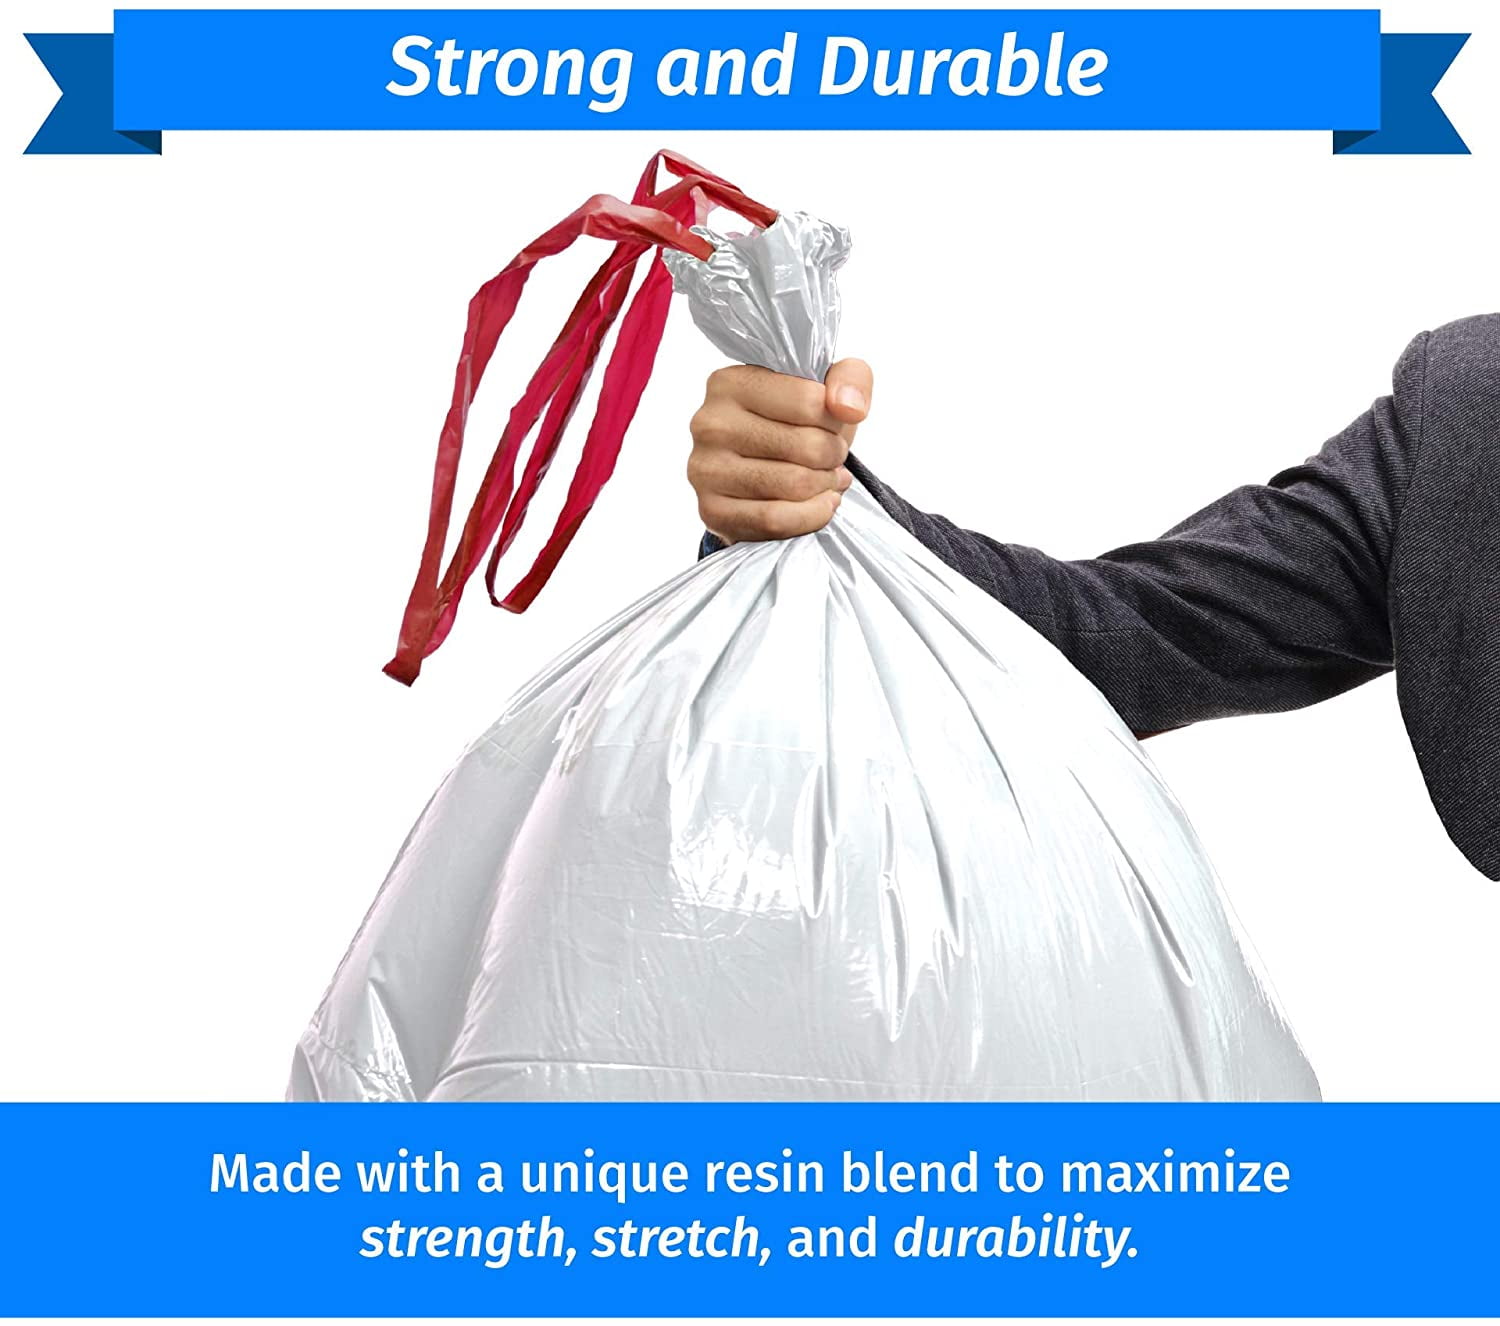 12 Gallon Garbage Bags, Drawstring: White,1.2 Mil, 22.75 x 31.5, 50 BA –  PlasticMill